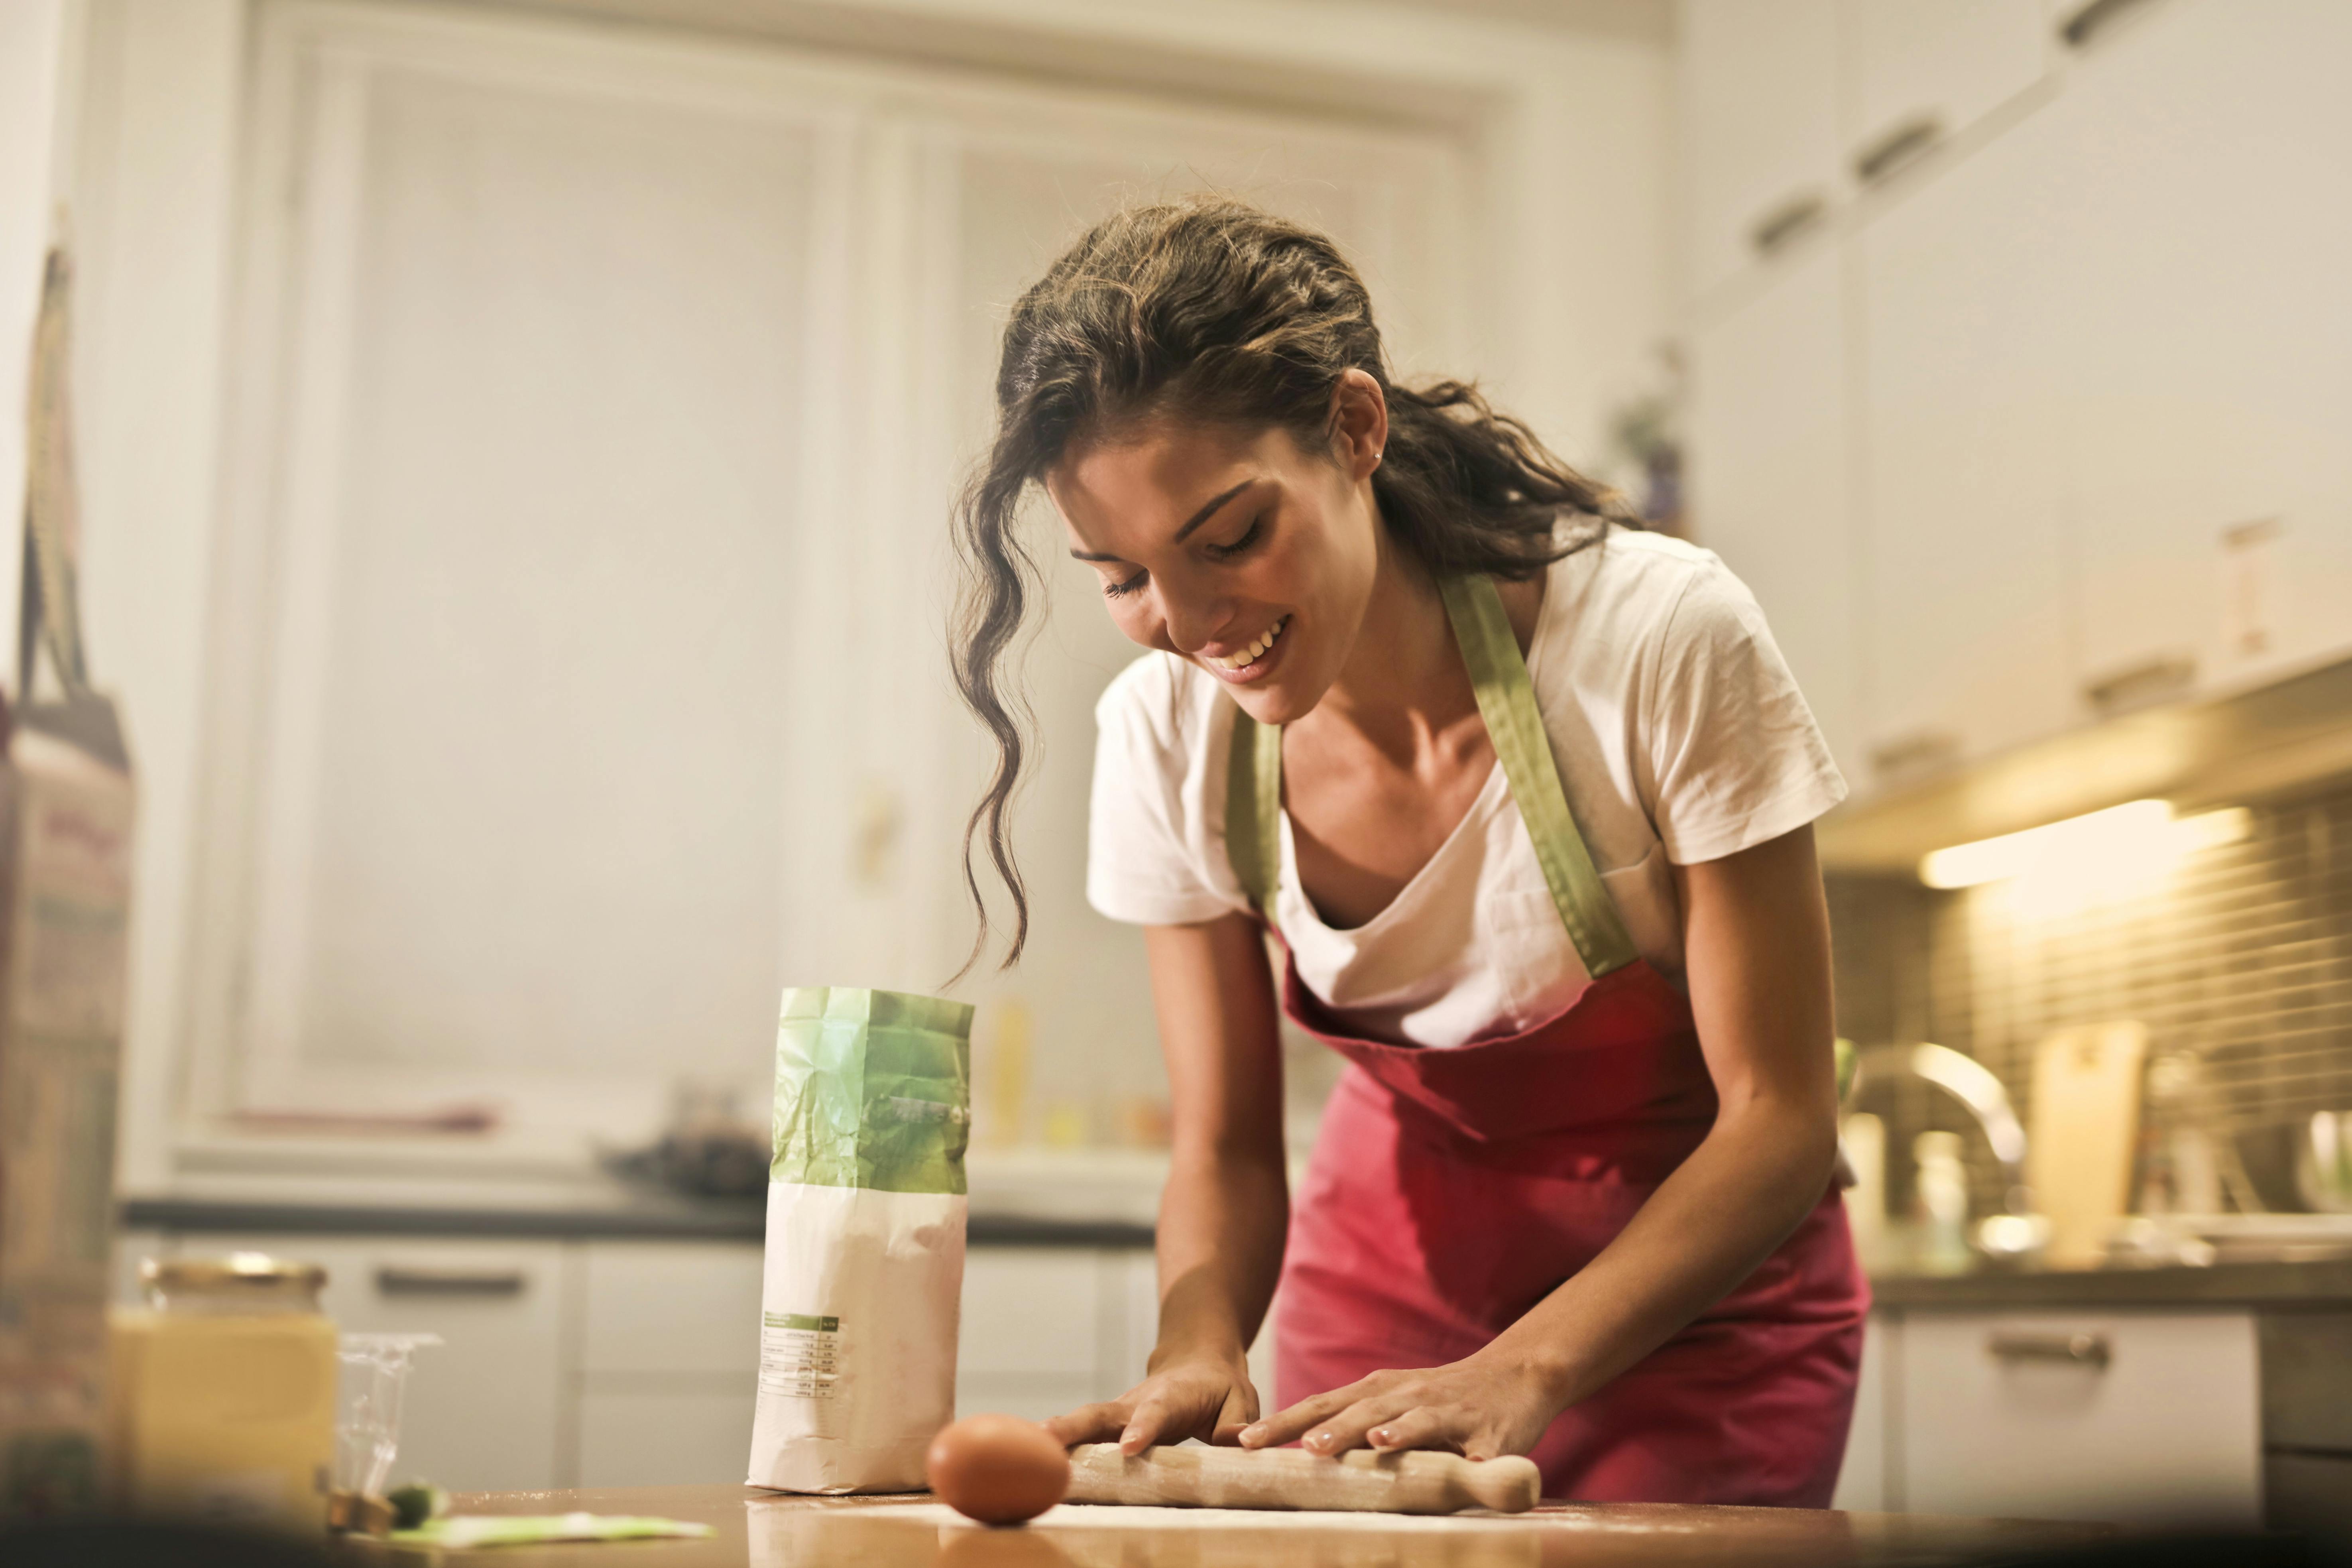 A woman making food | Source: Pexels